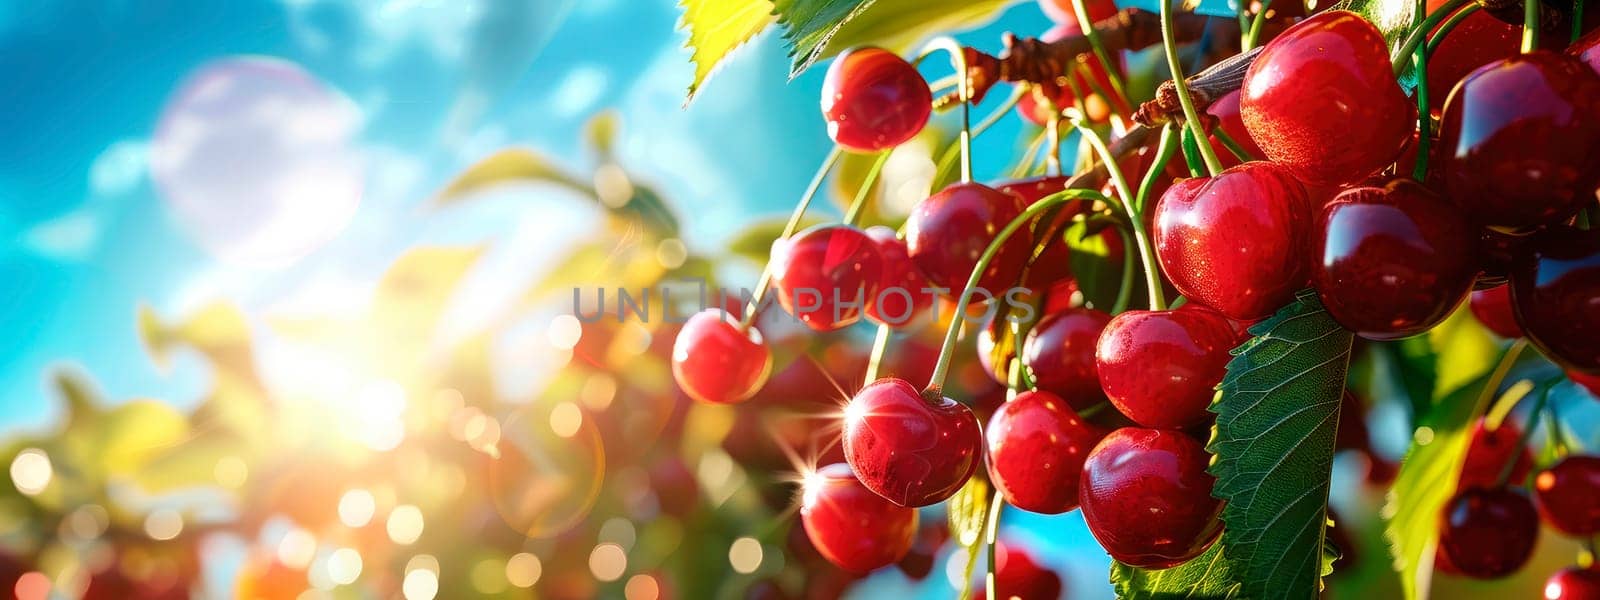 Cherry harvest in the garden. selective focus. by yanadjana